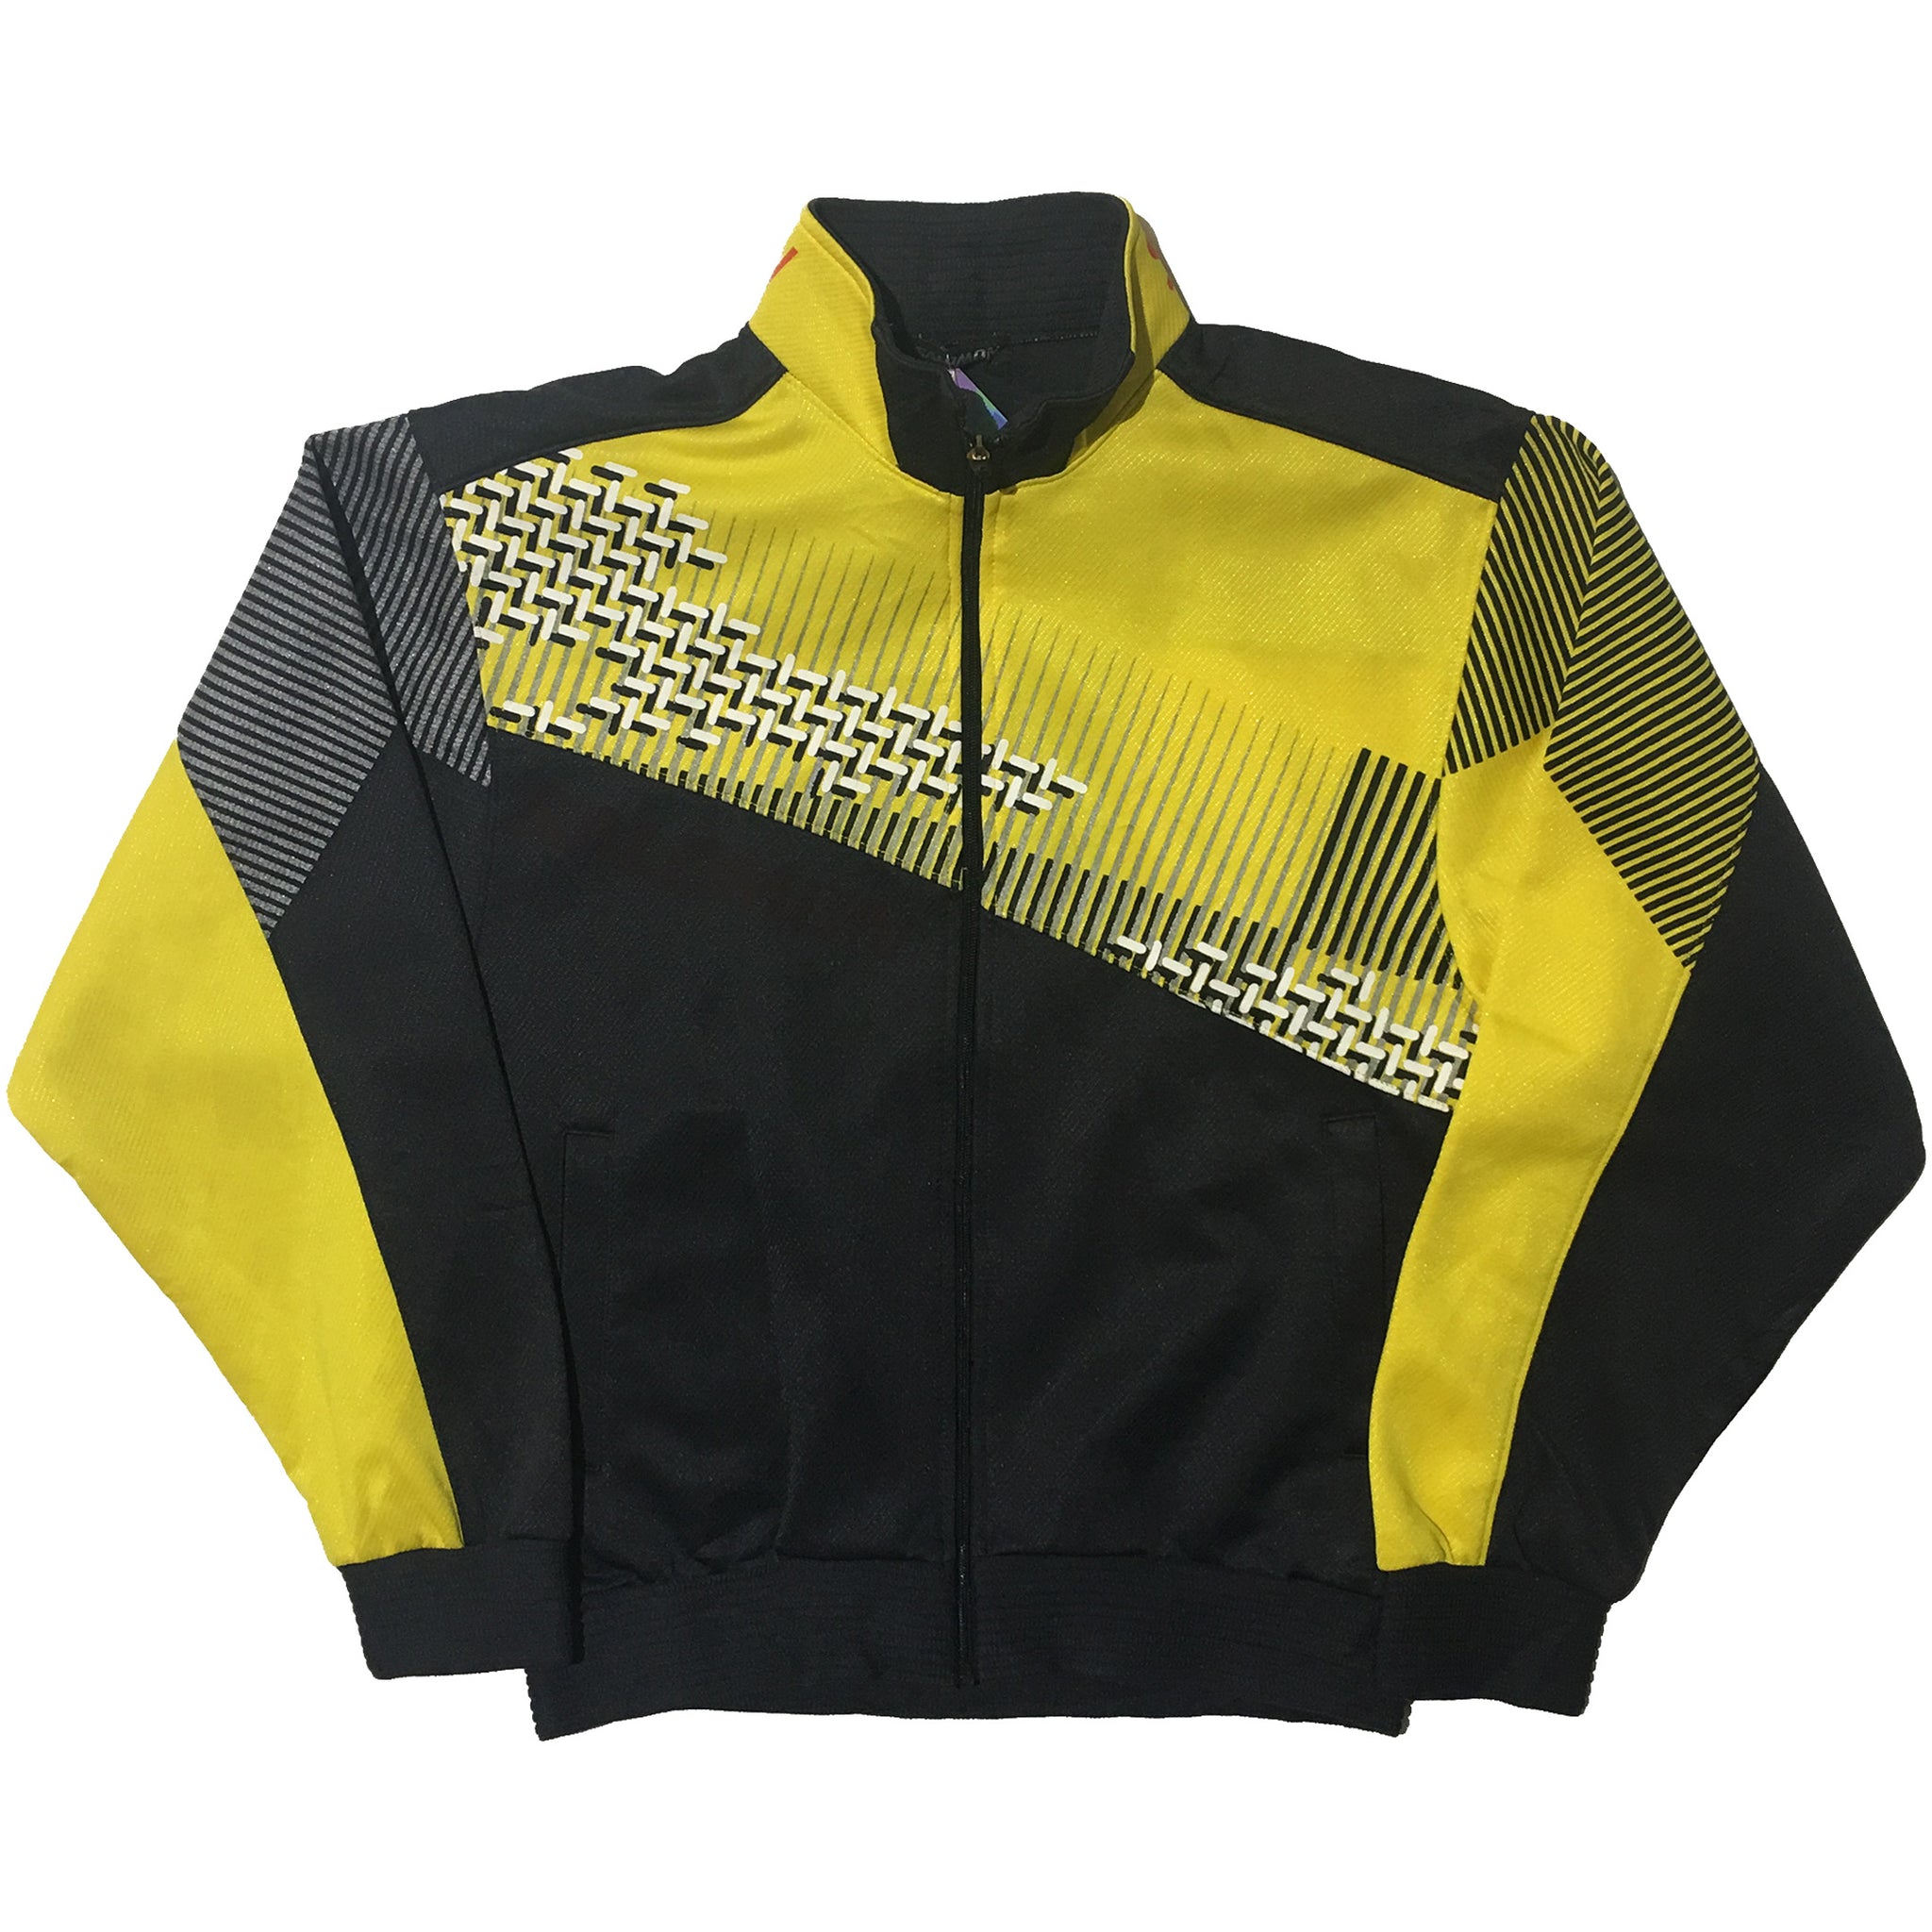 Salomon Yellow and Black Colour Block Jacket